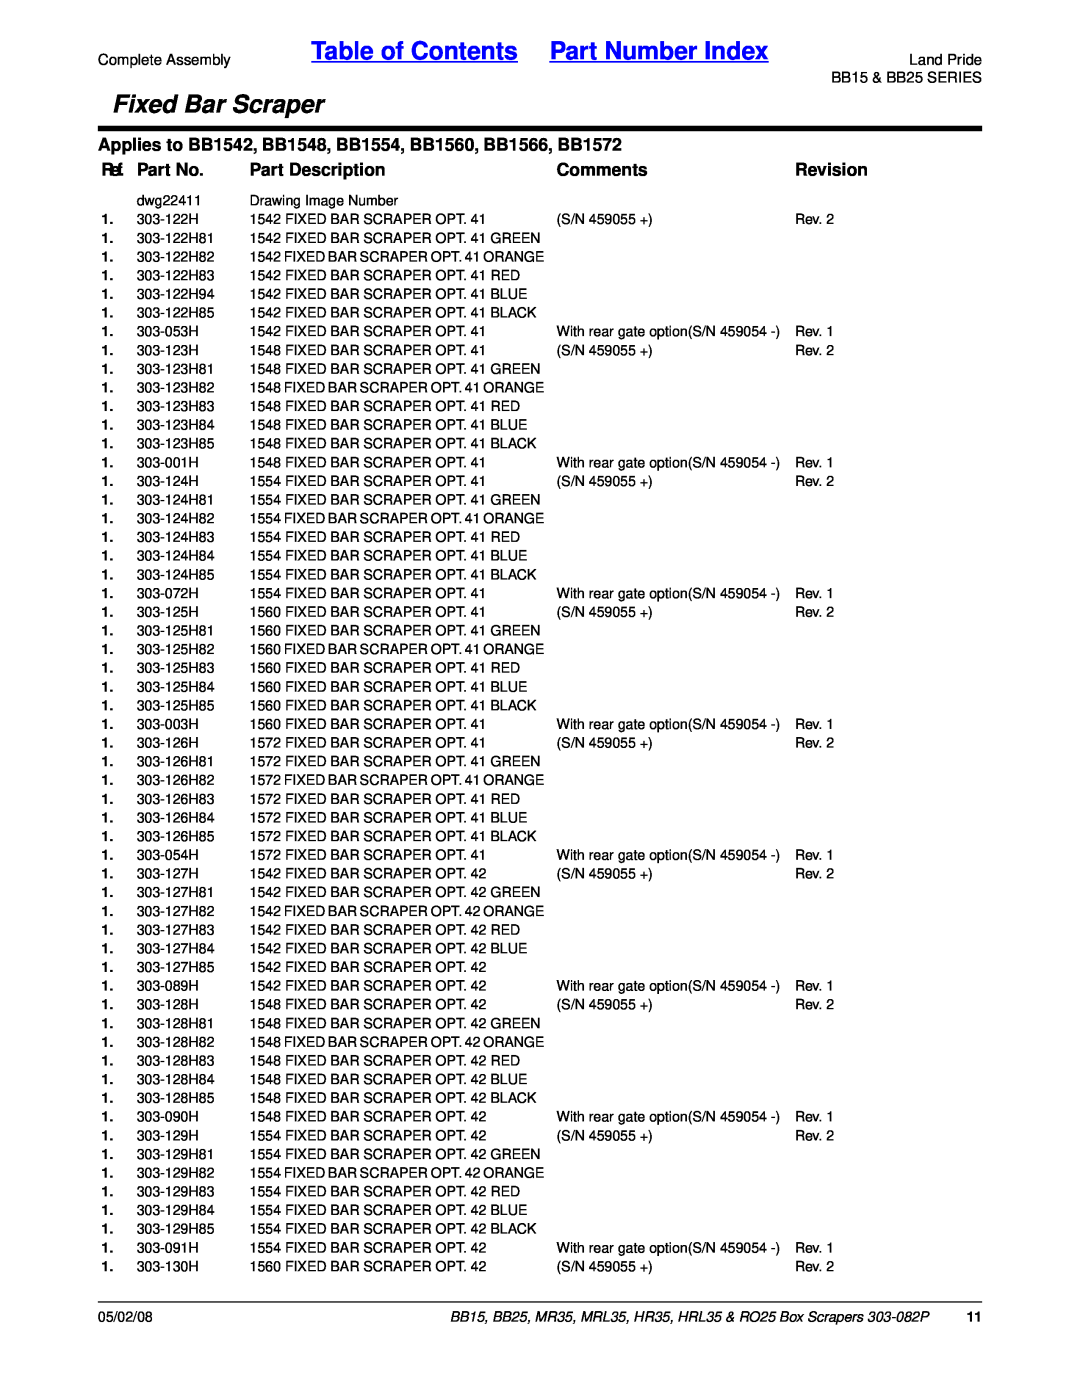 Land Pride MRL35, MR35 Fixed Bar Scraper, Table of Contents Part Number Index, Ref. Part No, Part Description, Comments 